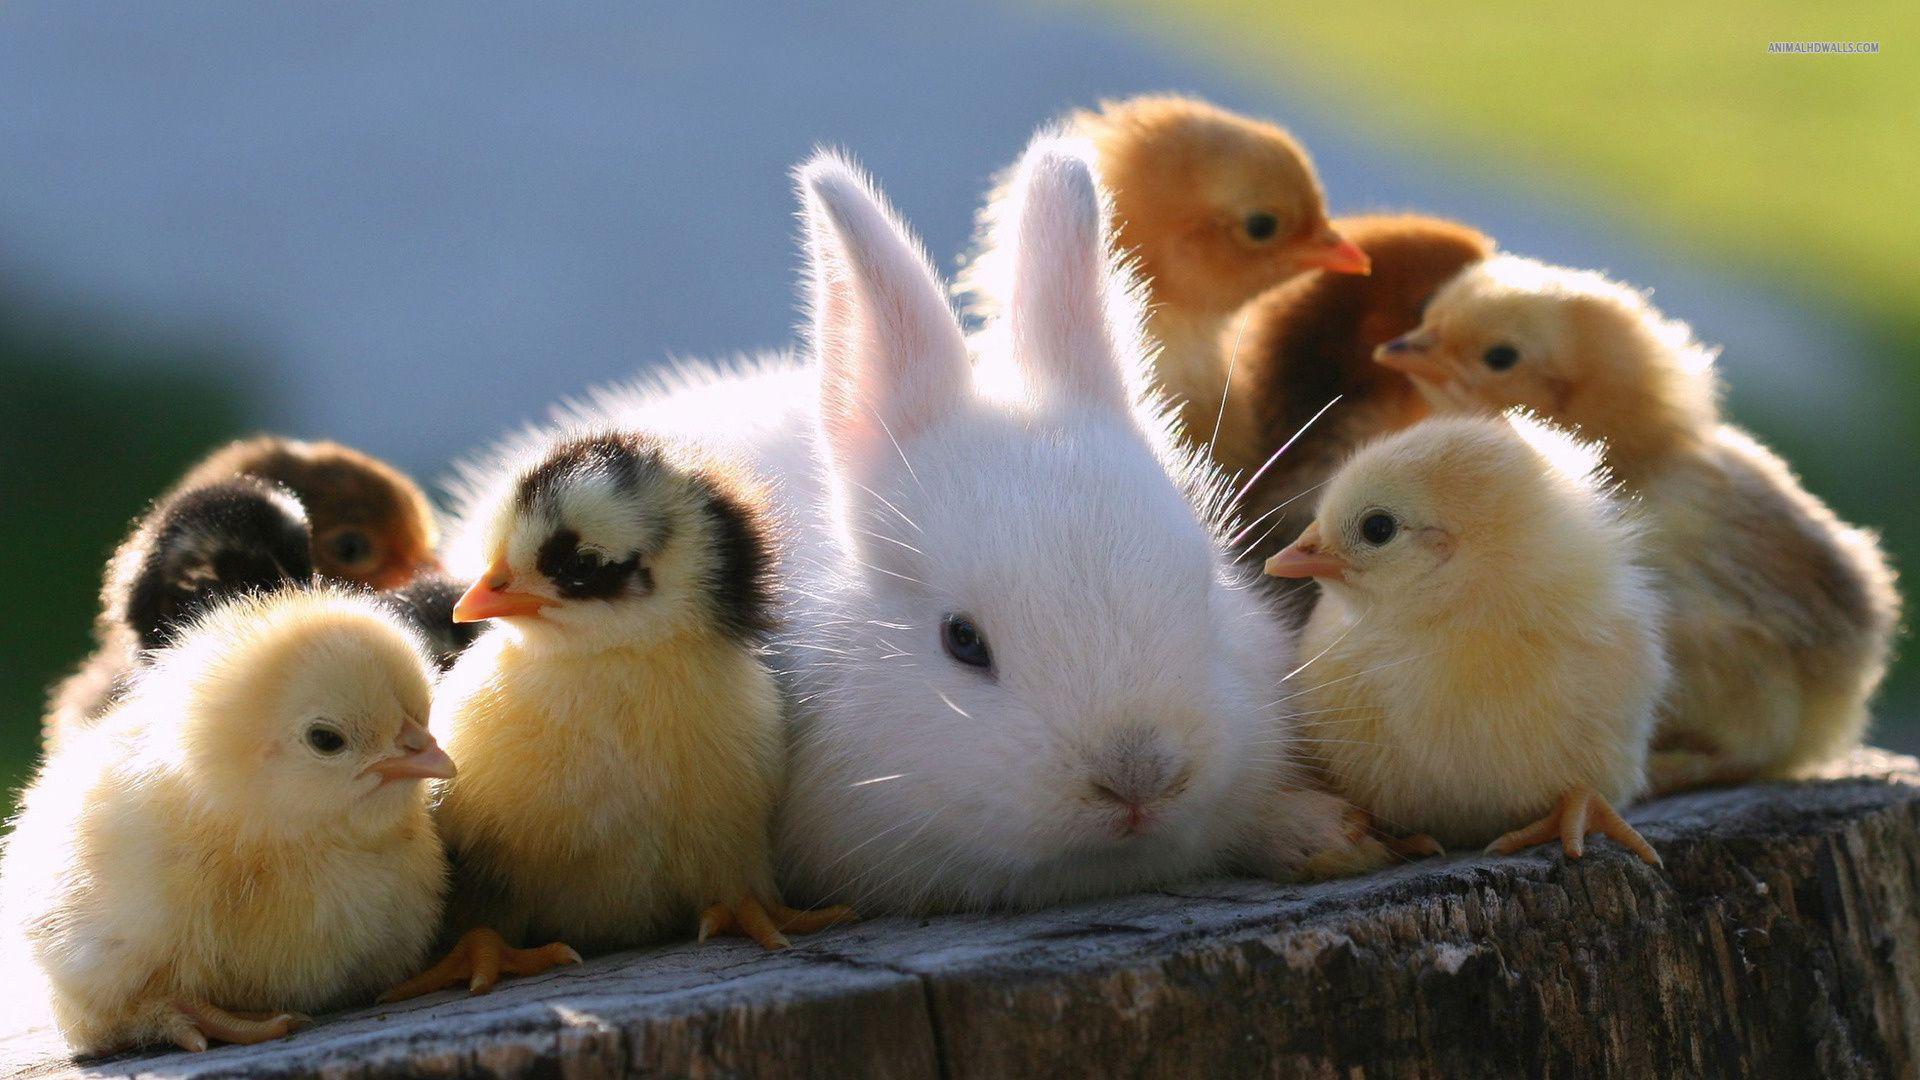 Animals, Bunny, Chickens, Rabbit, Baby Animals, Bunny